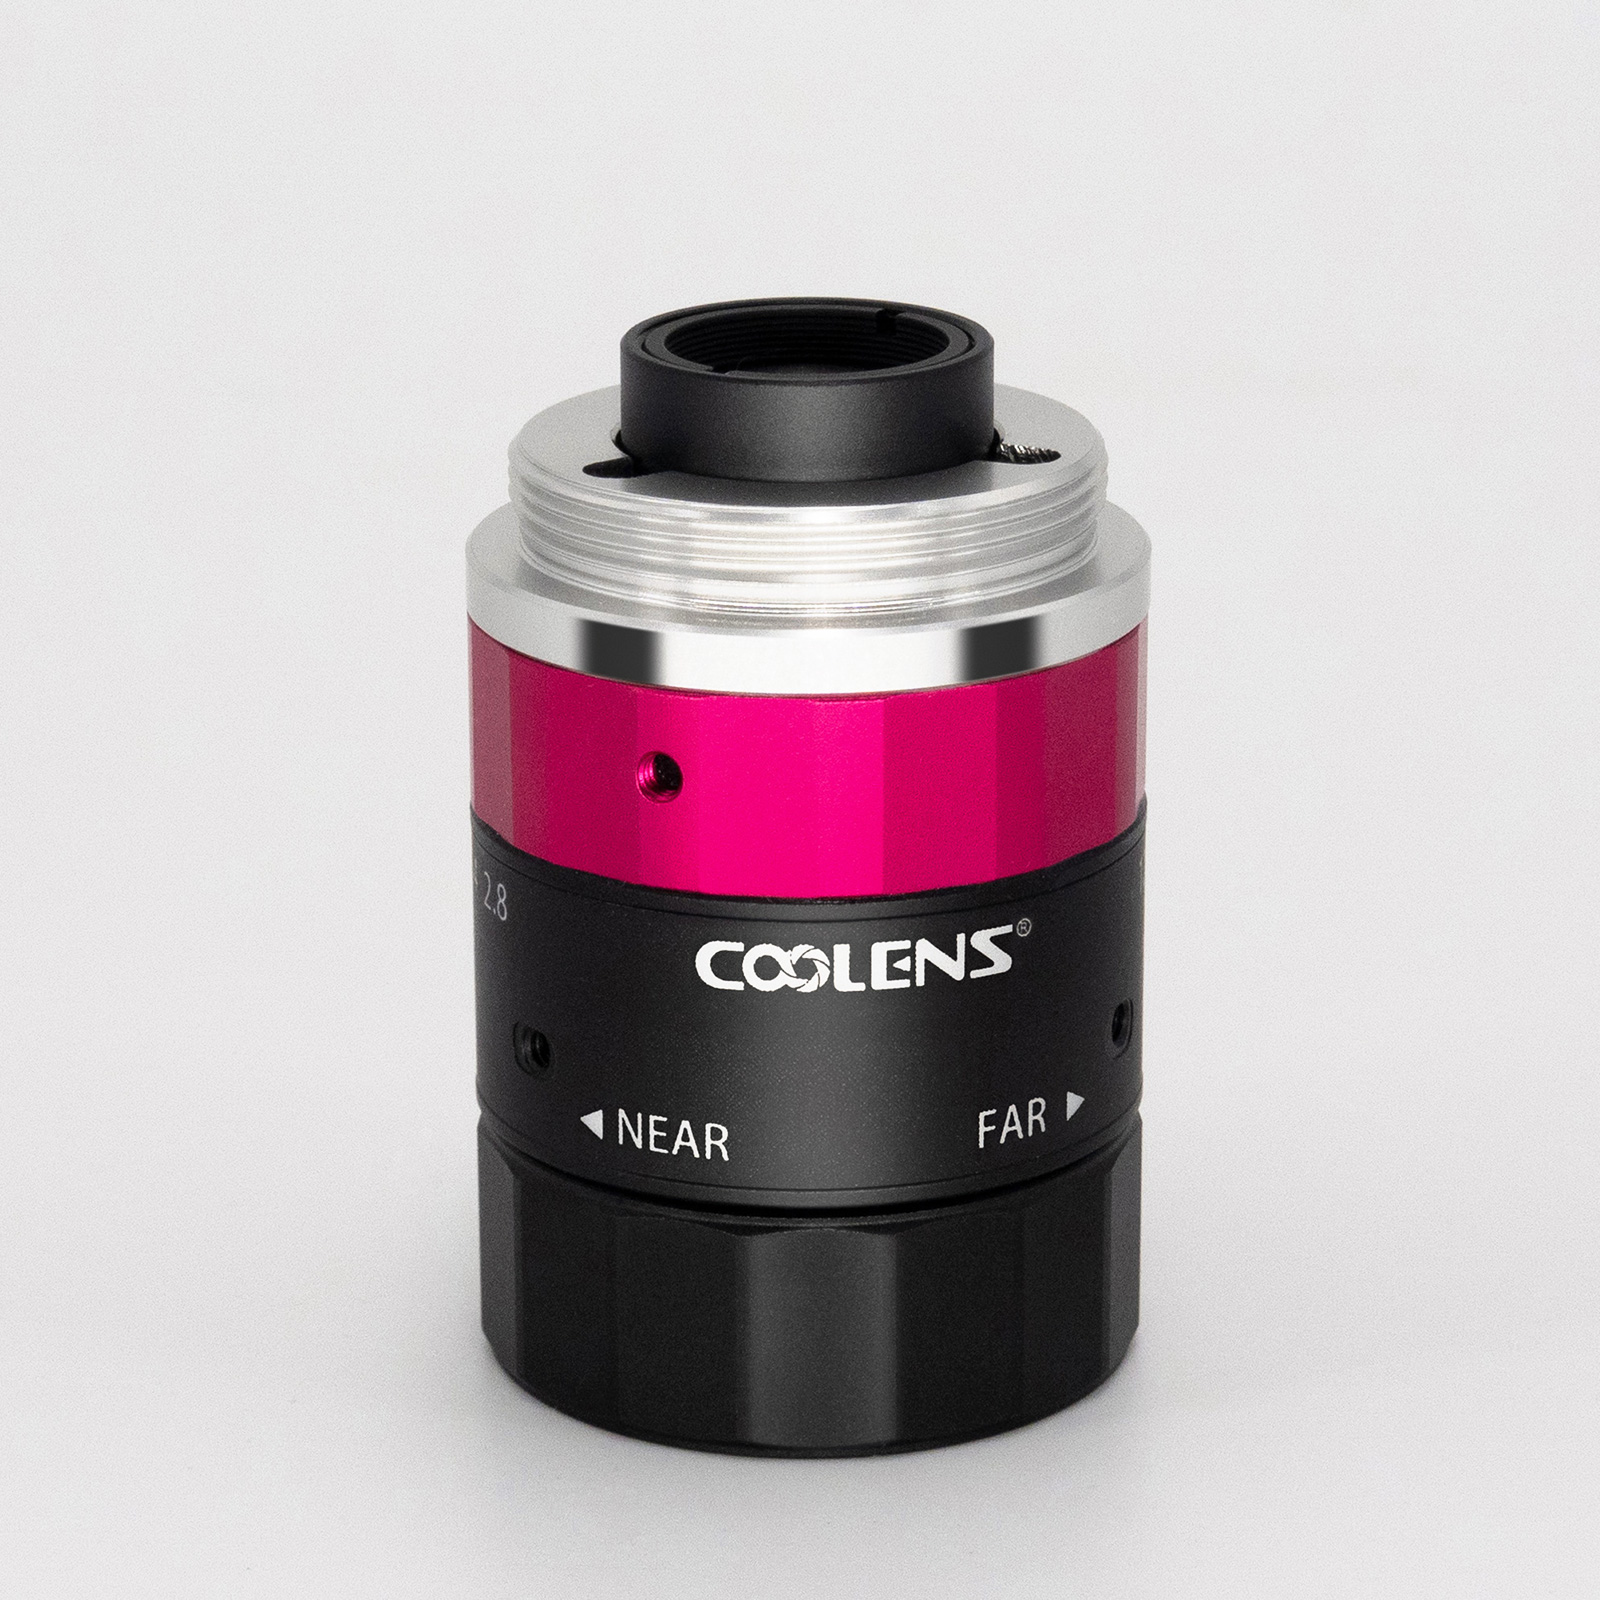 1/1.8" f12 Fixed Focus Lens